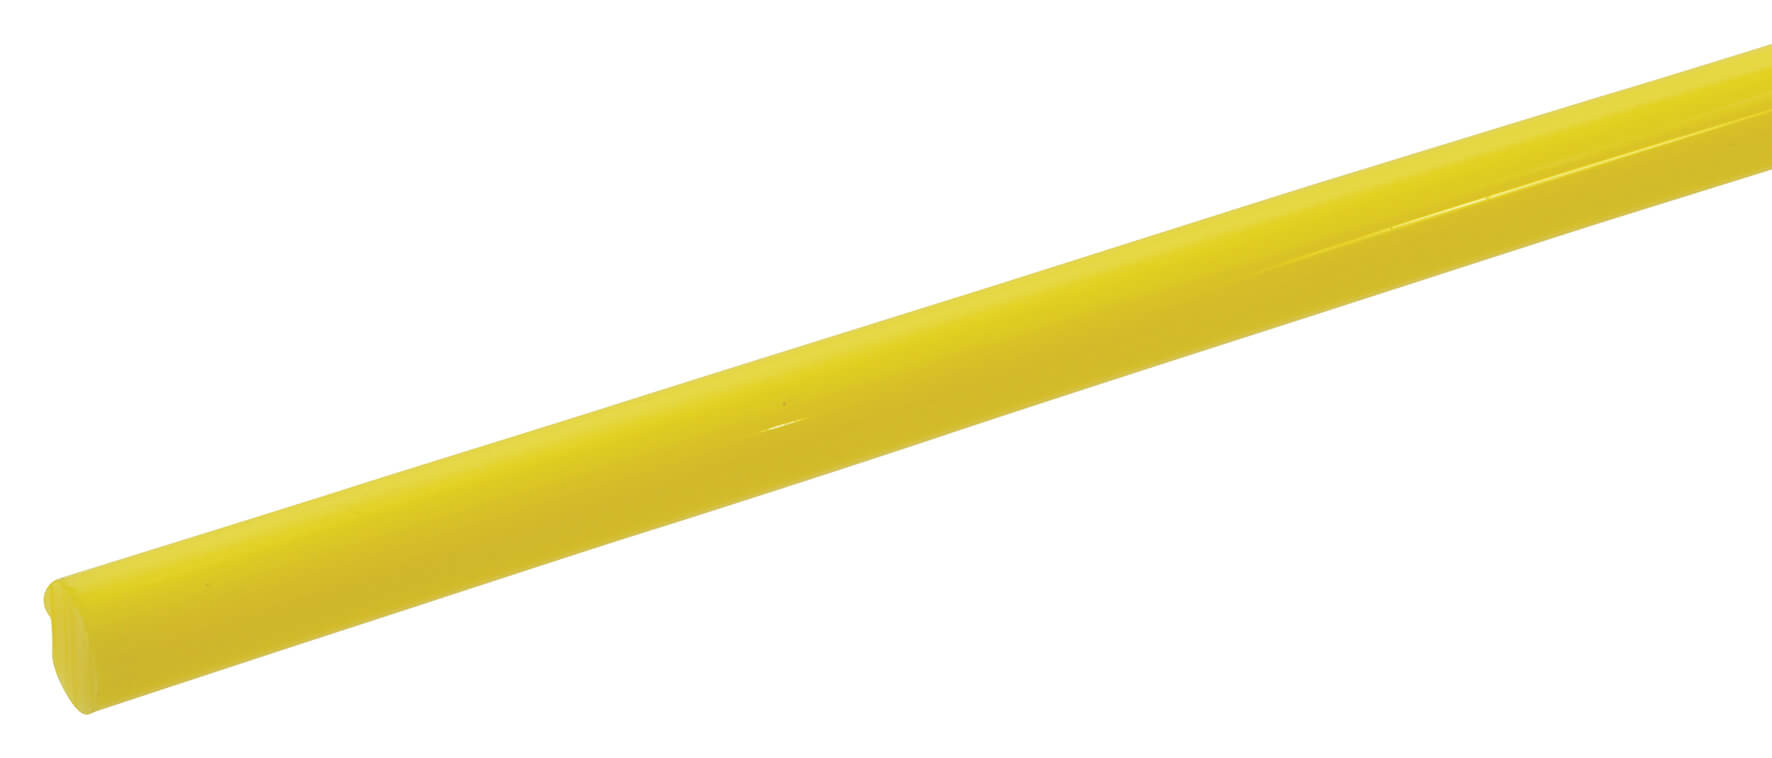 Acrylic Rod 6.4mm x 610mm - Solid Yellow